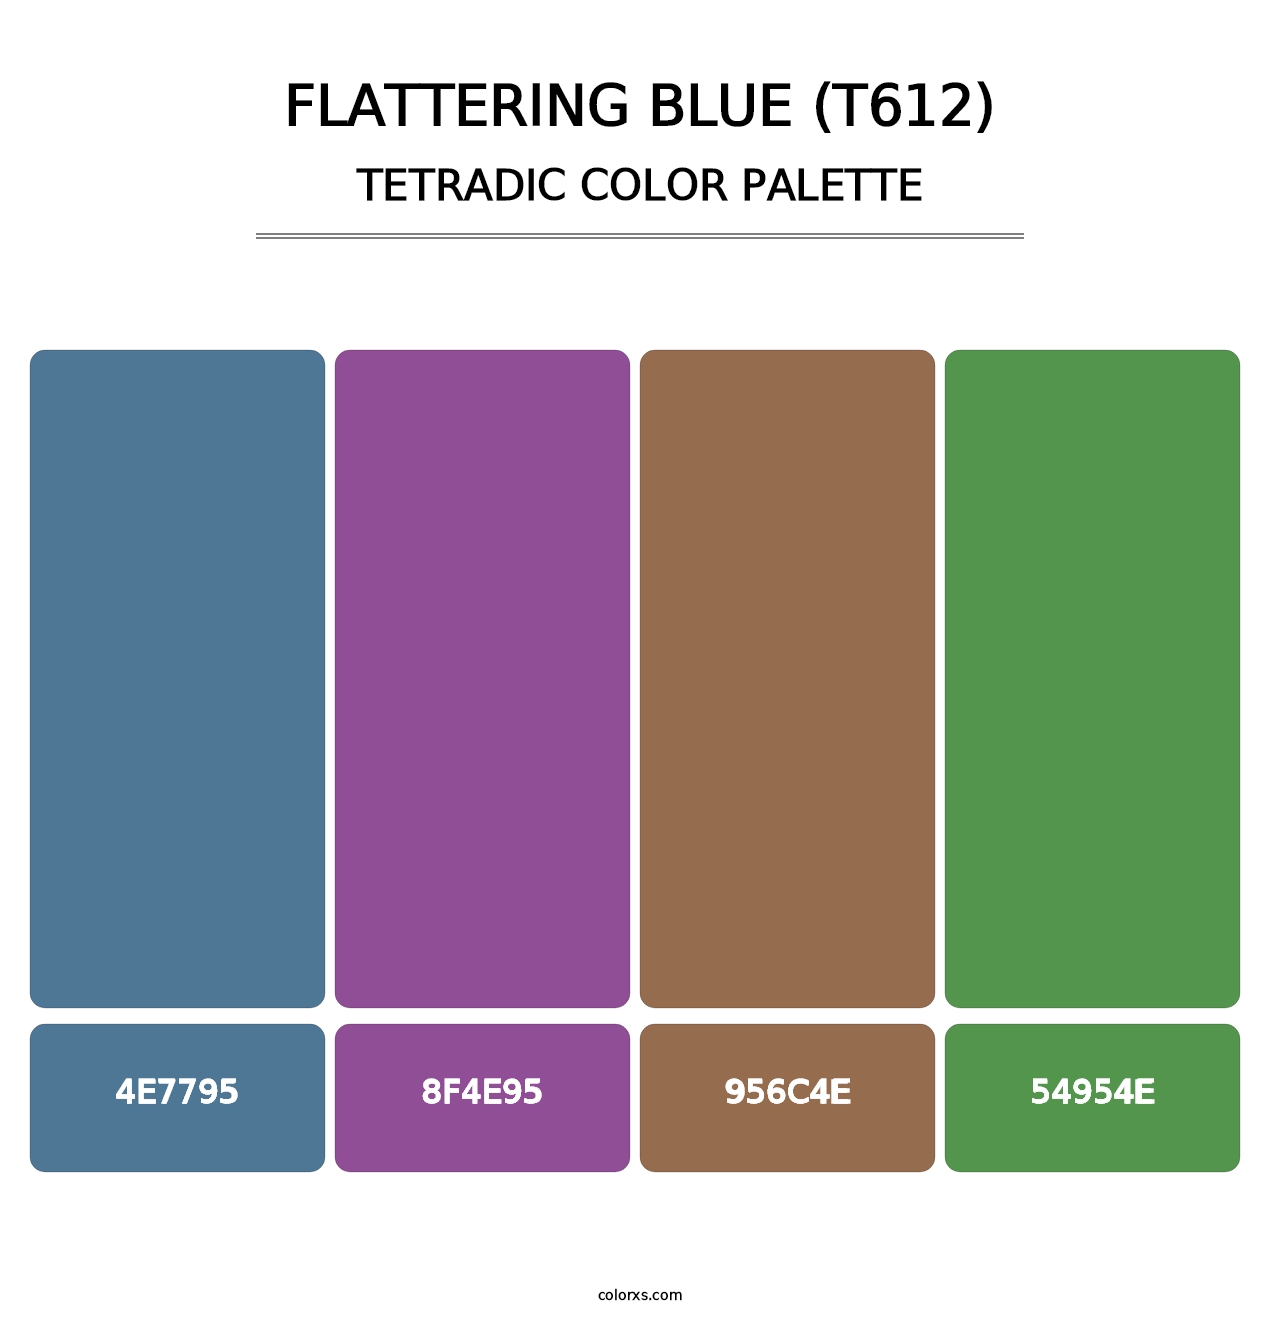 Flattering Blue (T612) - Tetradic Color Palette